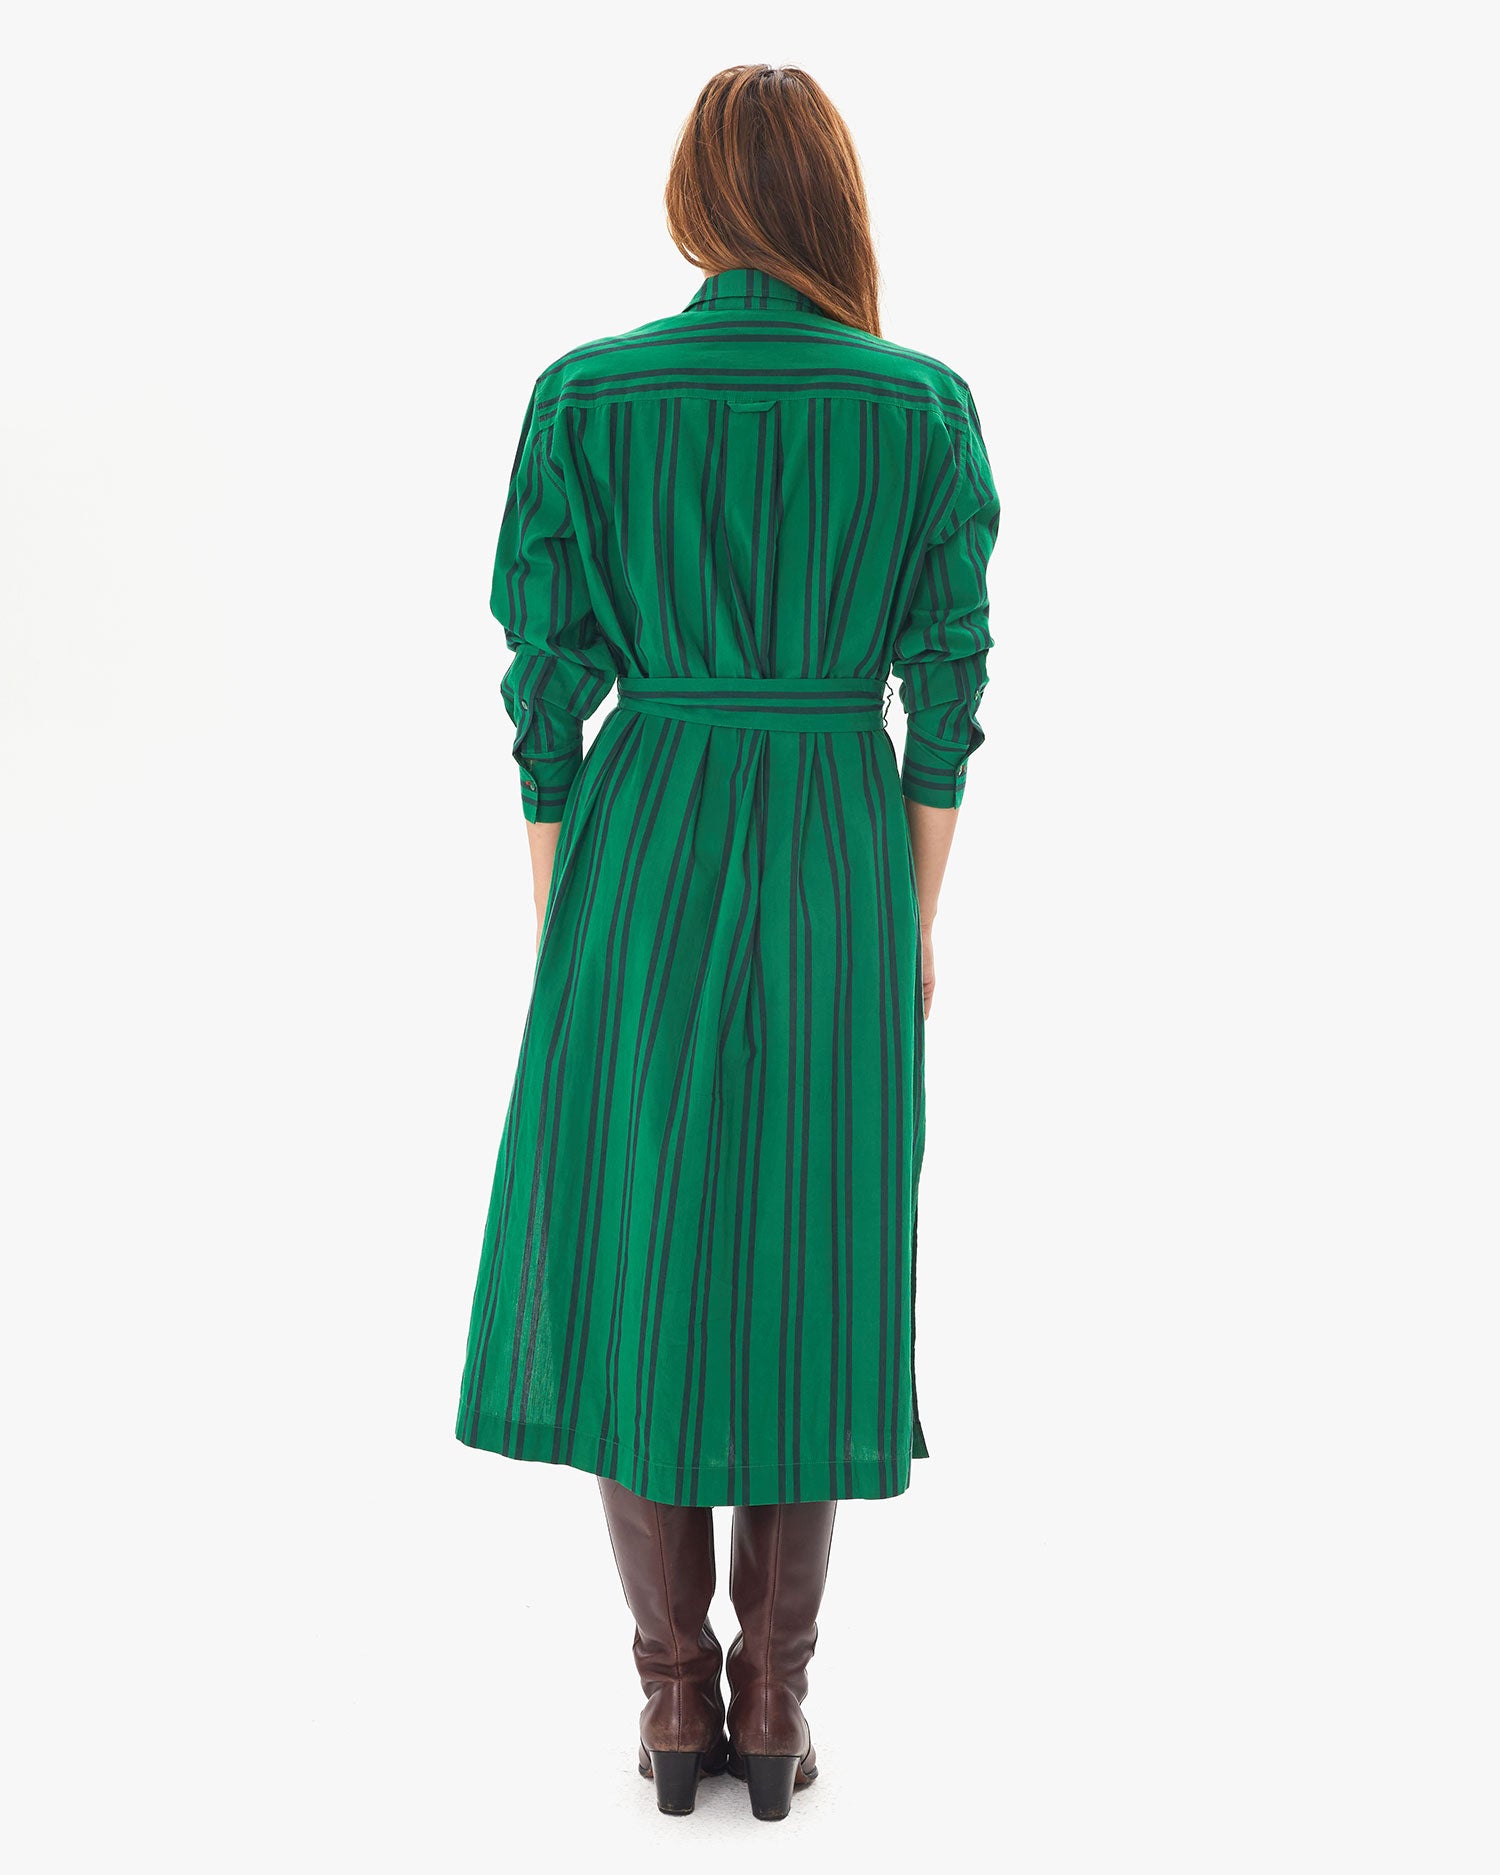 Back View of Green & Black Stripe Phoebe Dress on Aurelia 